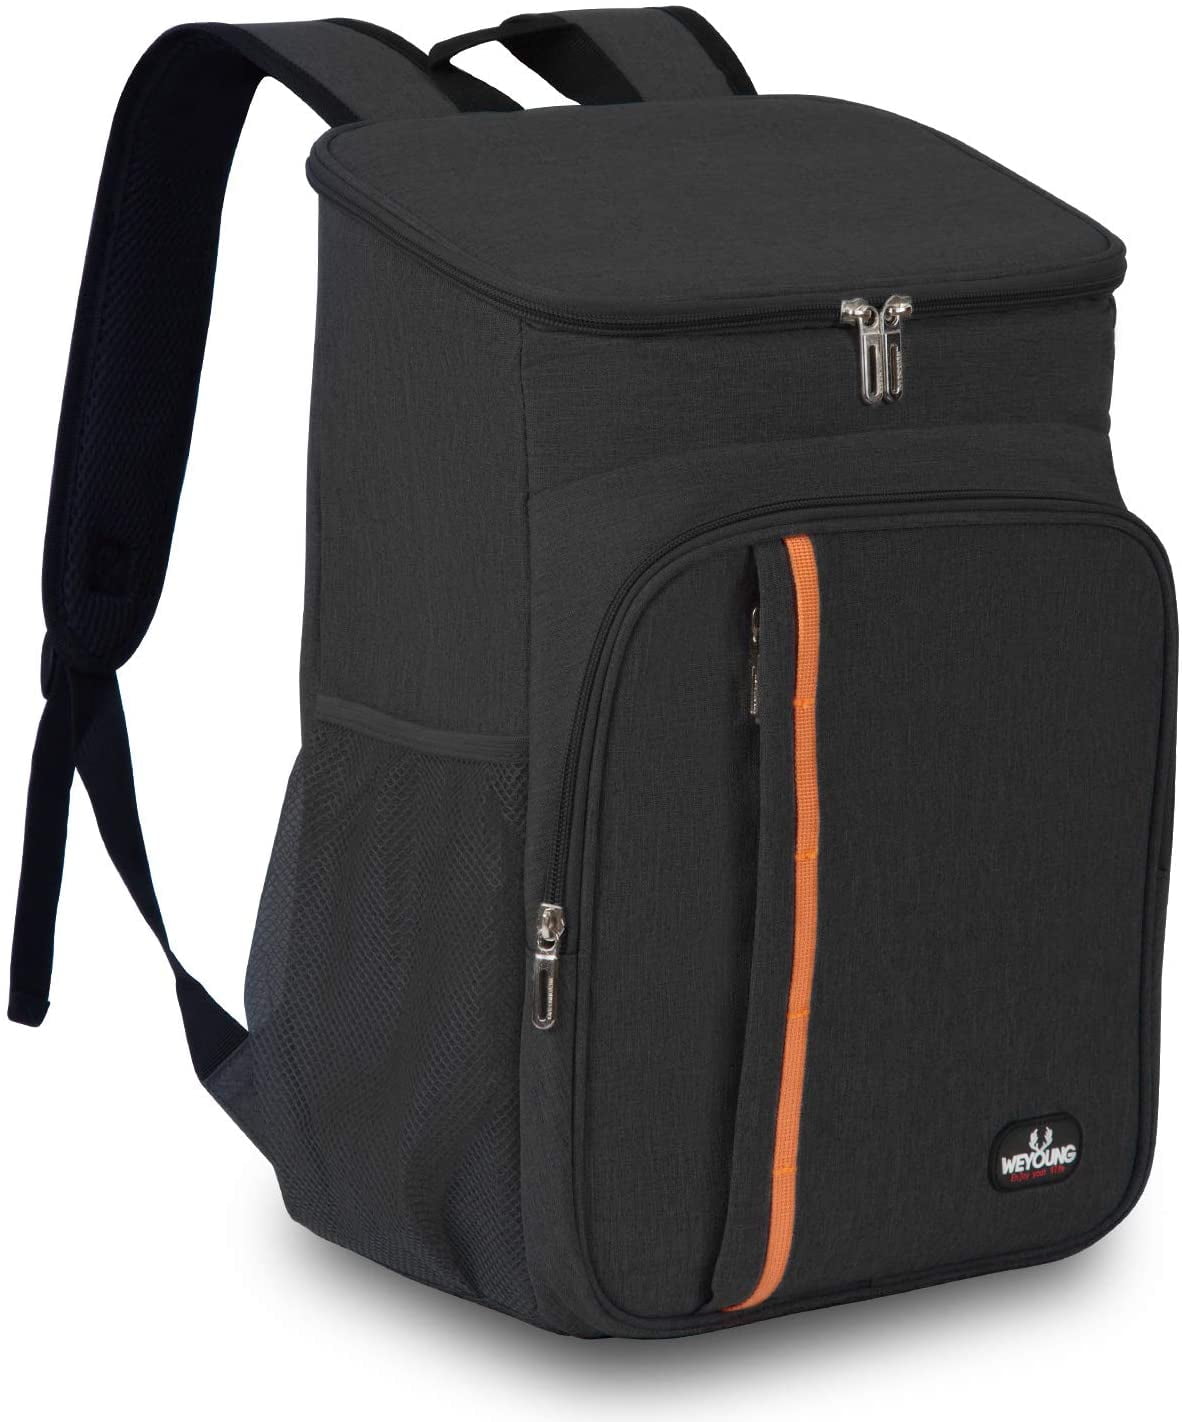 Latest Model. Black Backpack Cooler Leak Proof Lightweight for Men and Women, NEXIMEO Cooler Backpack Insulated Waterproof 